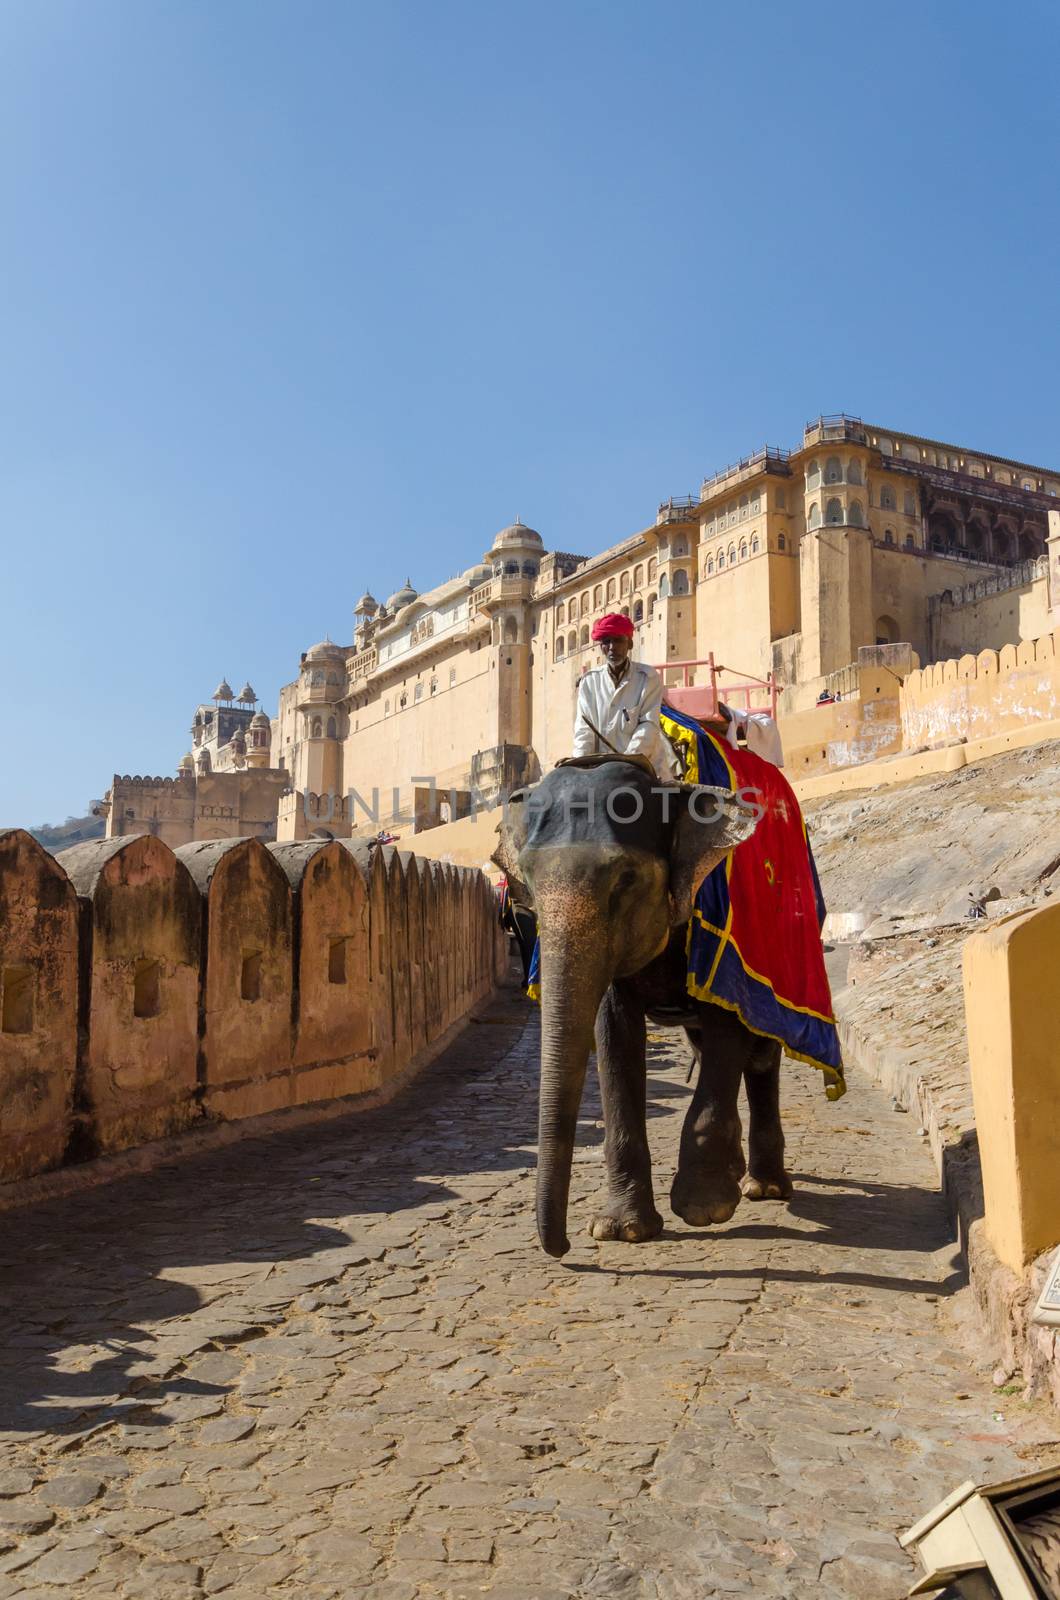 Jaipur, India - December 29, 2014: Decorated elephant at Amber Fort in Jaipur on December 29, 2014 in Jaipur, Rajasthan, India.